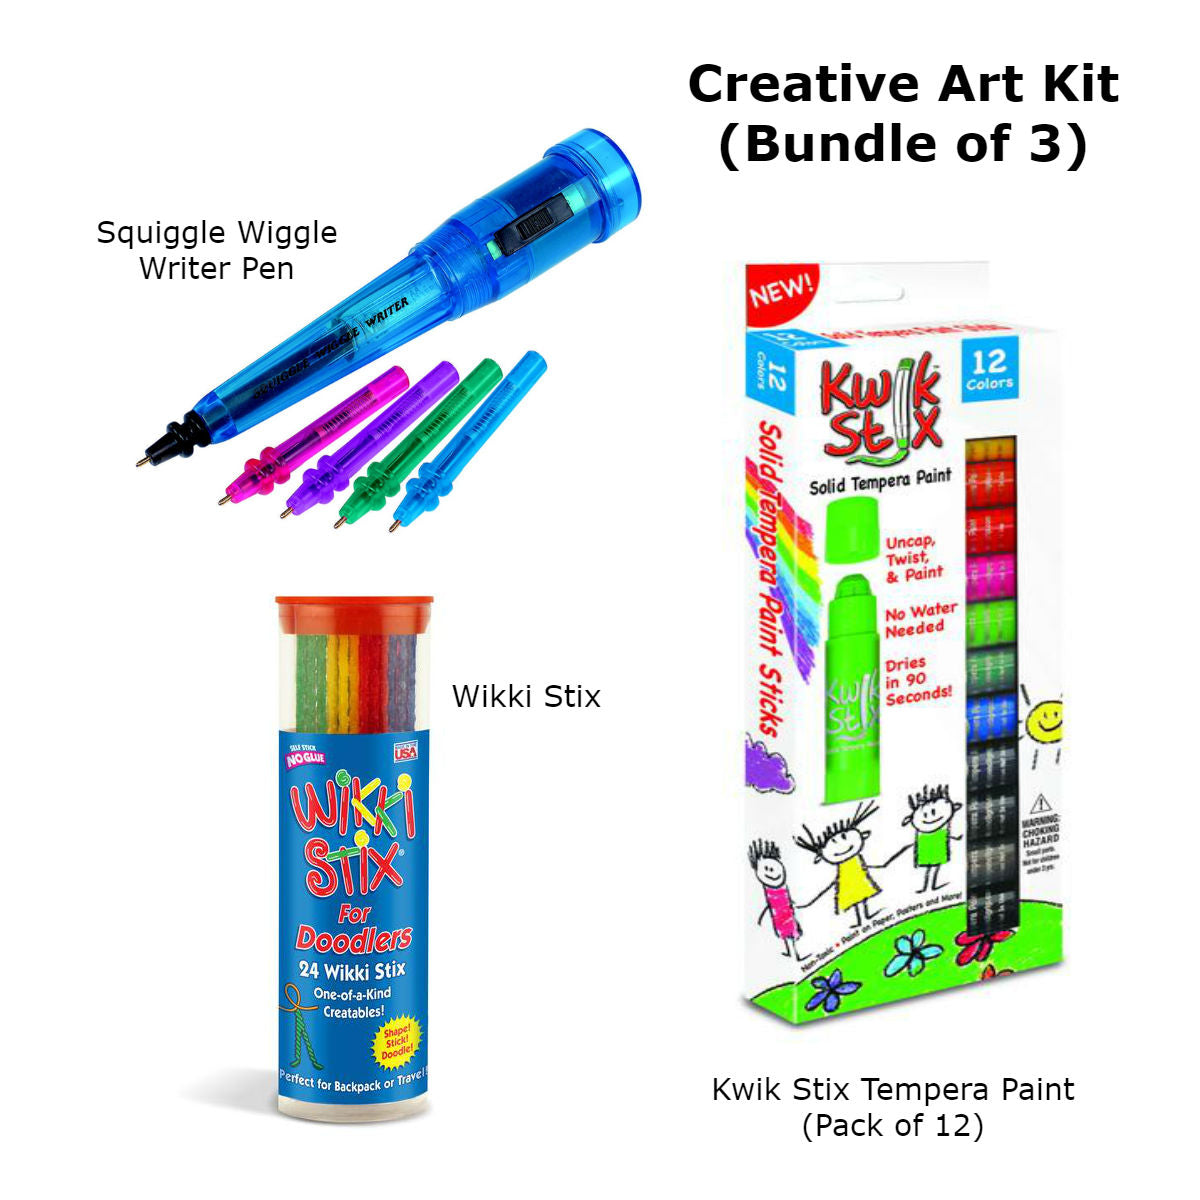 Creative Art Kit!